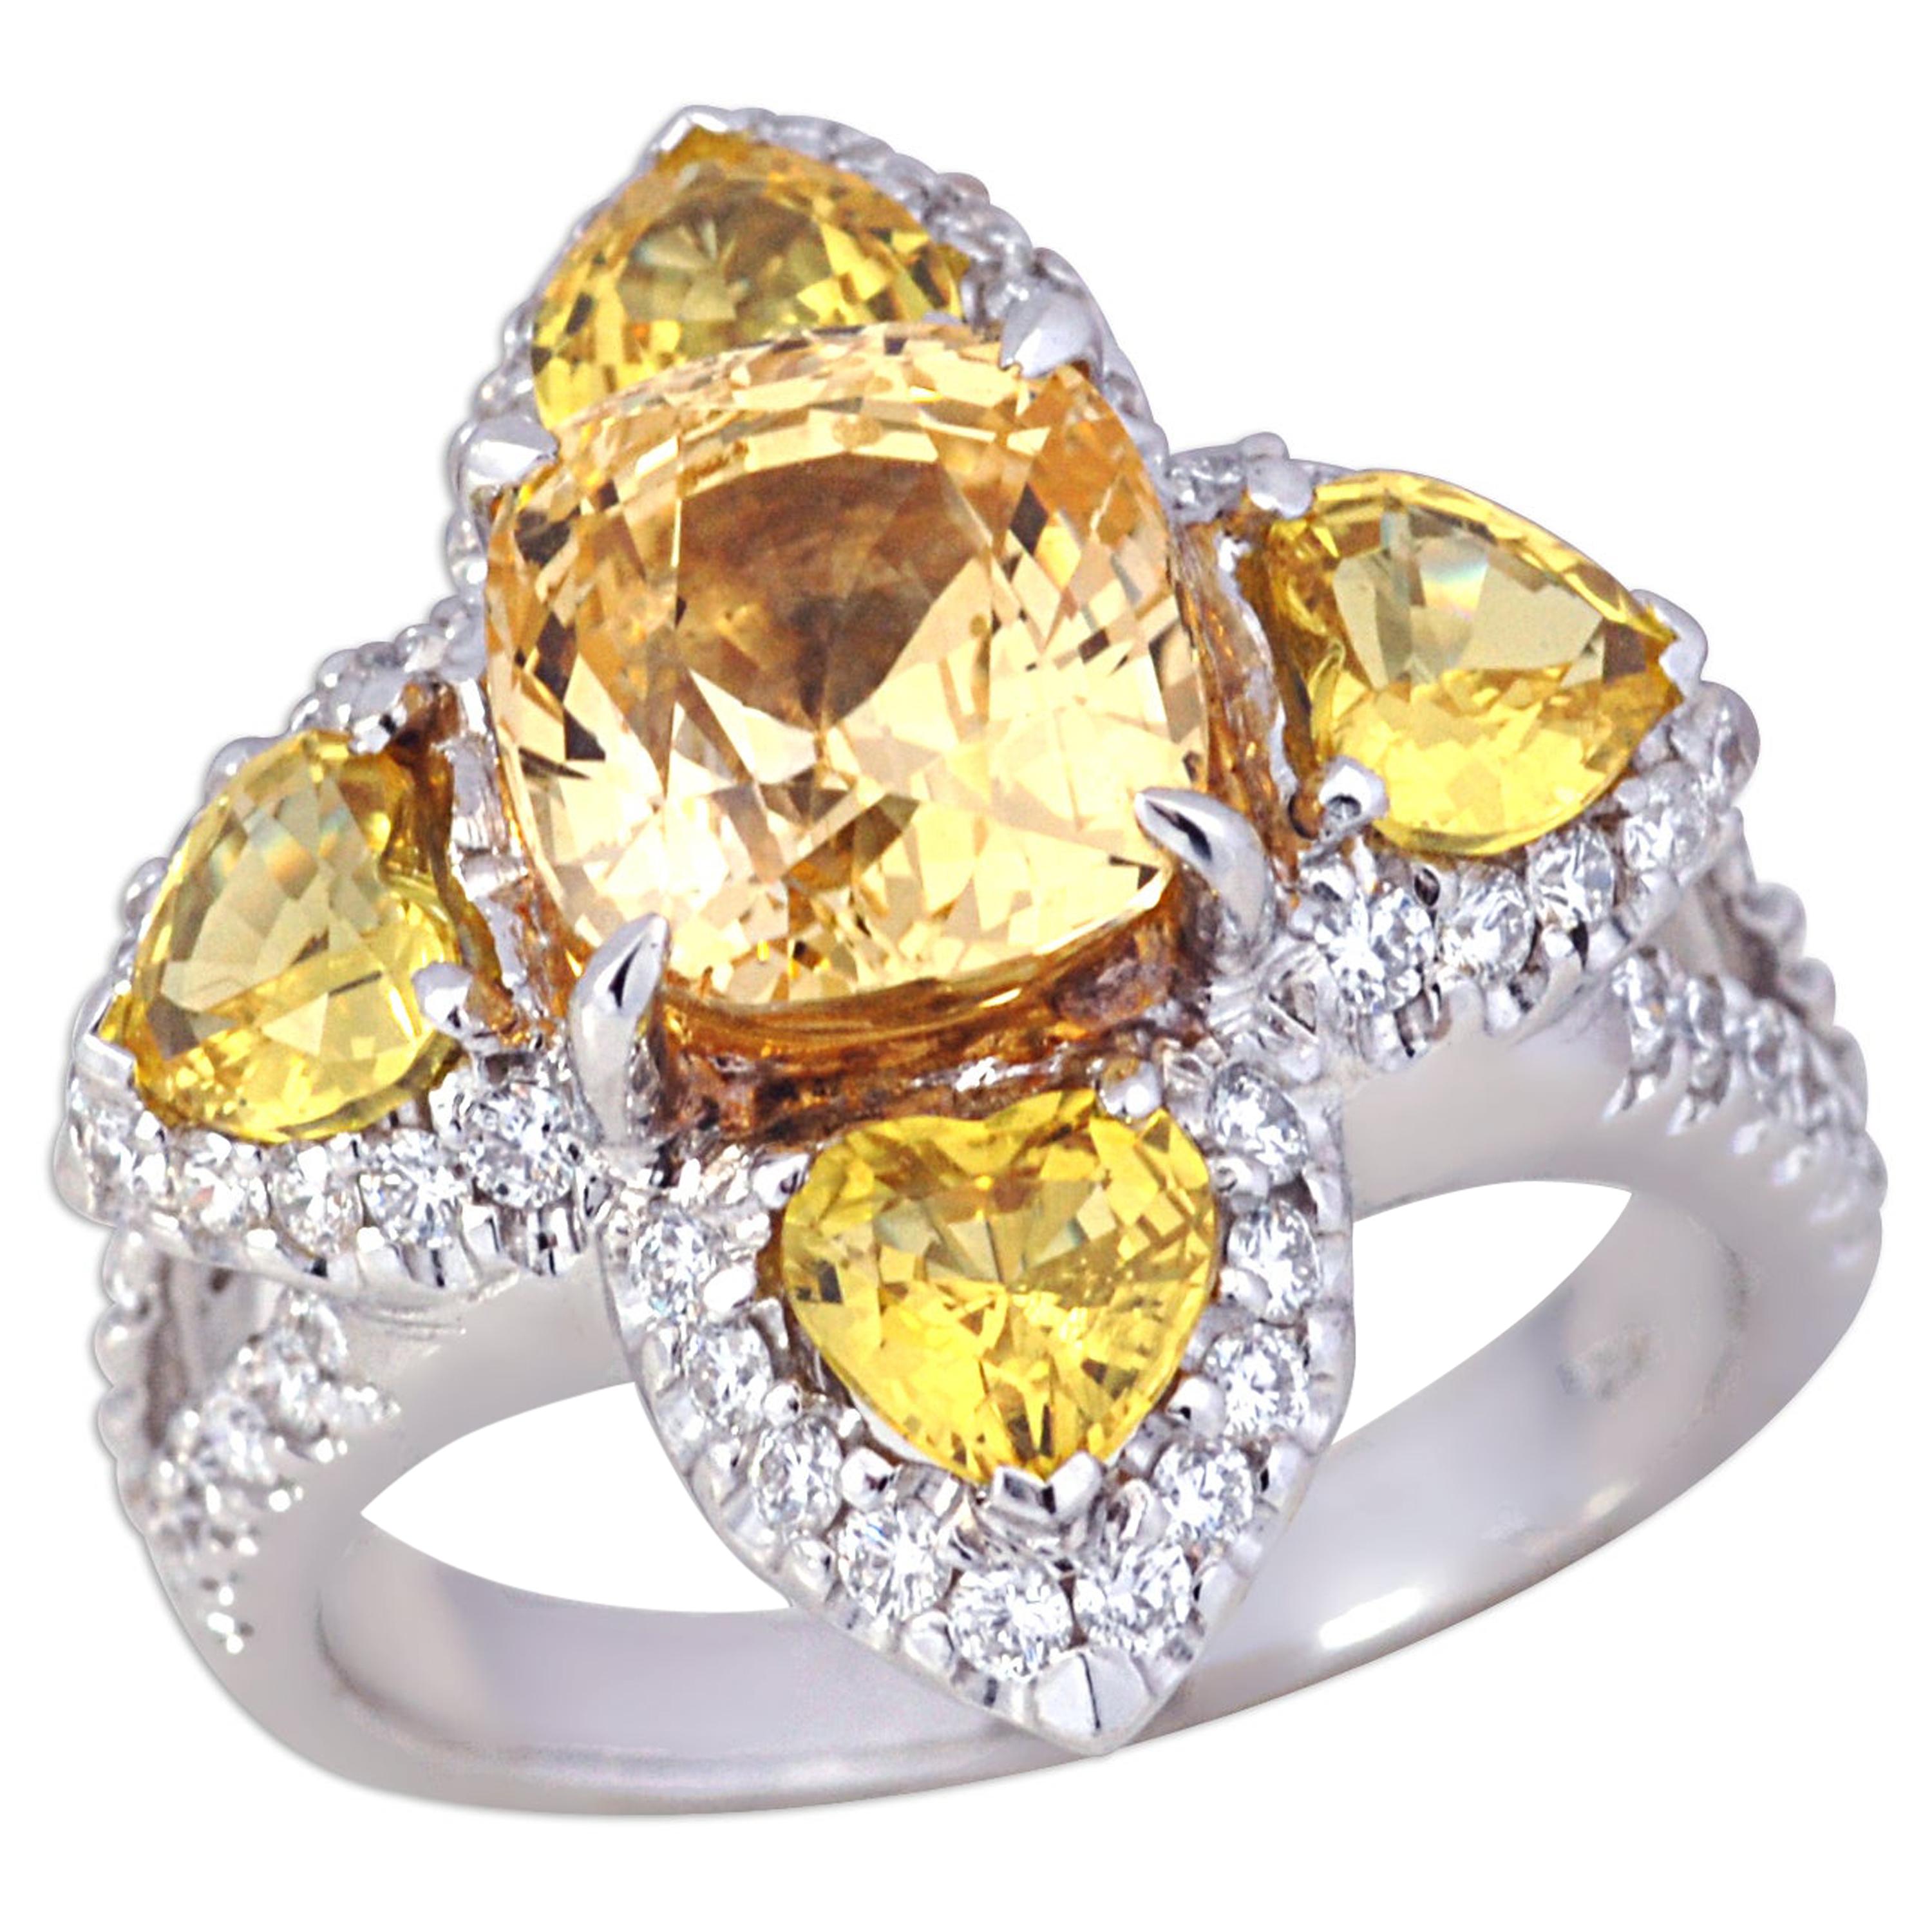 Yellow Sapphire with Diamond Ring Set in 18 Karat White Gold